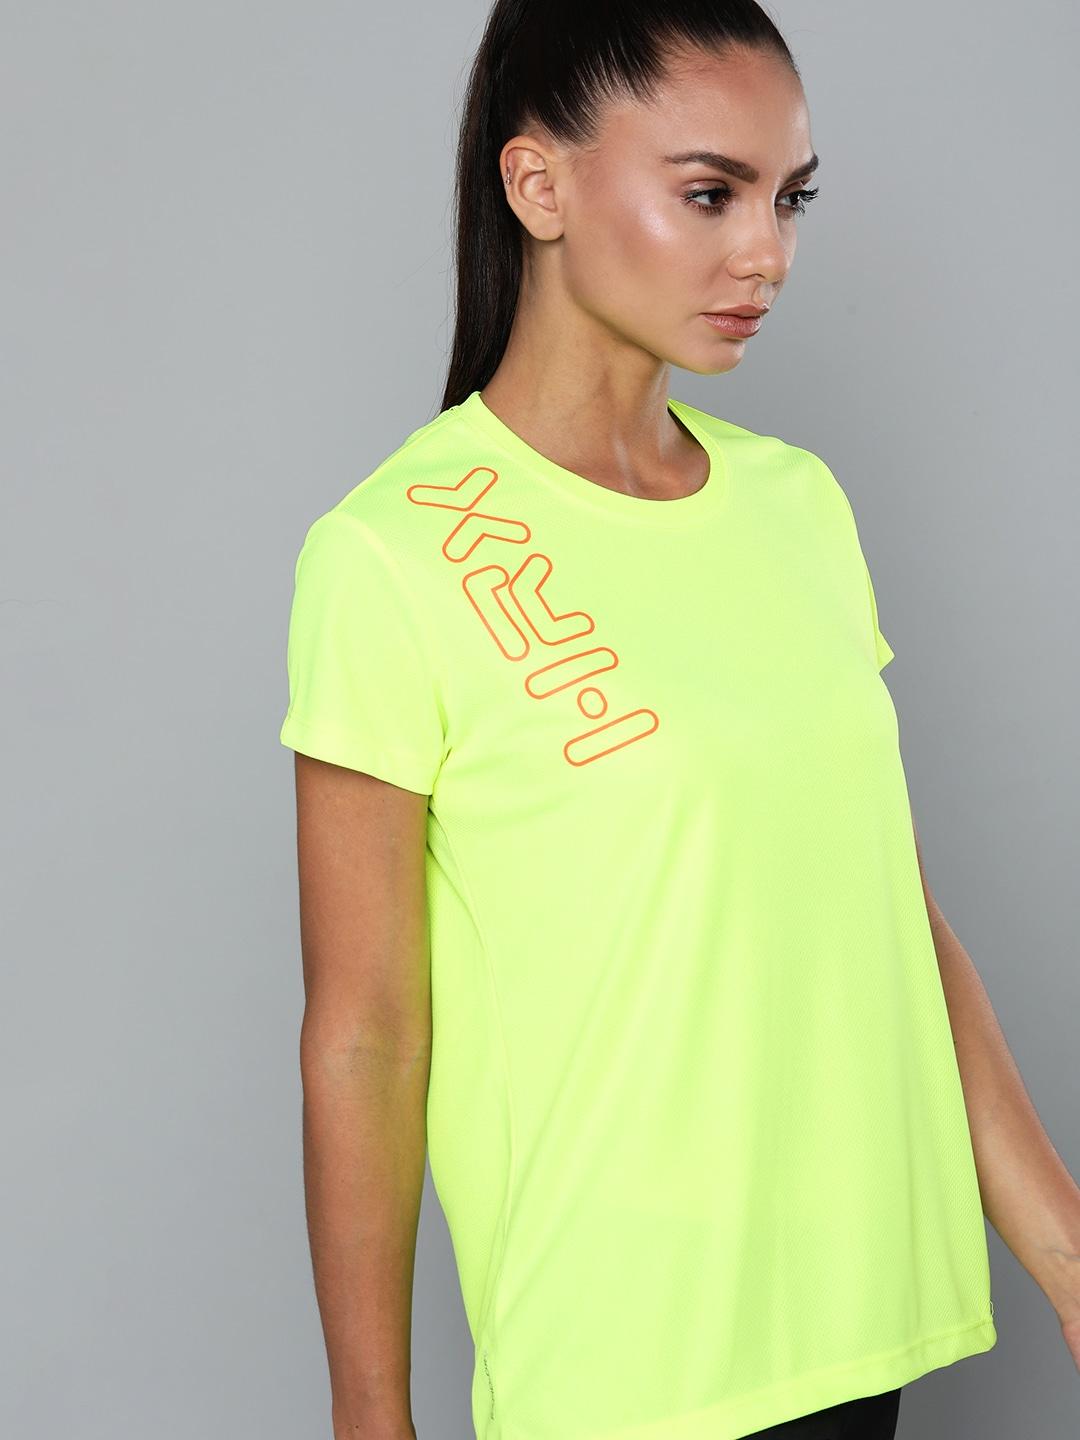 hrx by hrithik roshan running women neon lime rapid-dry brand carrier tshirts